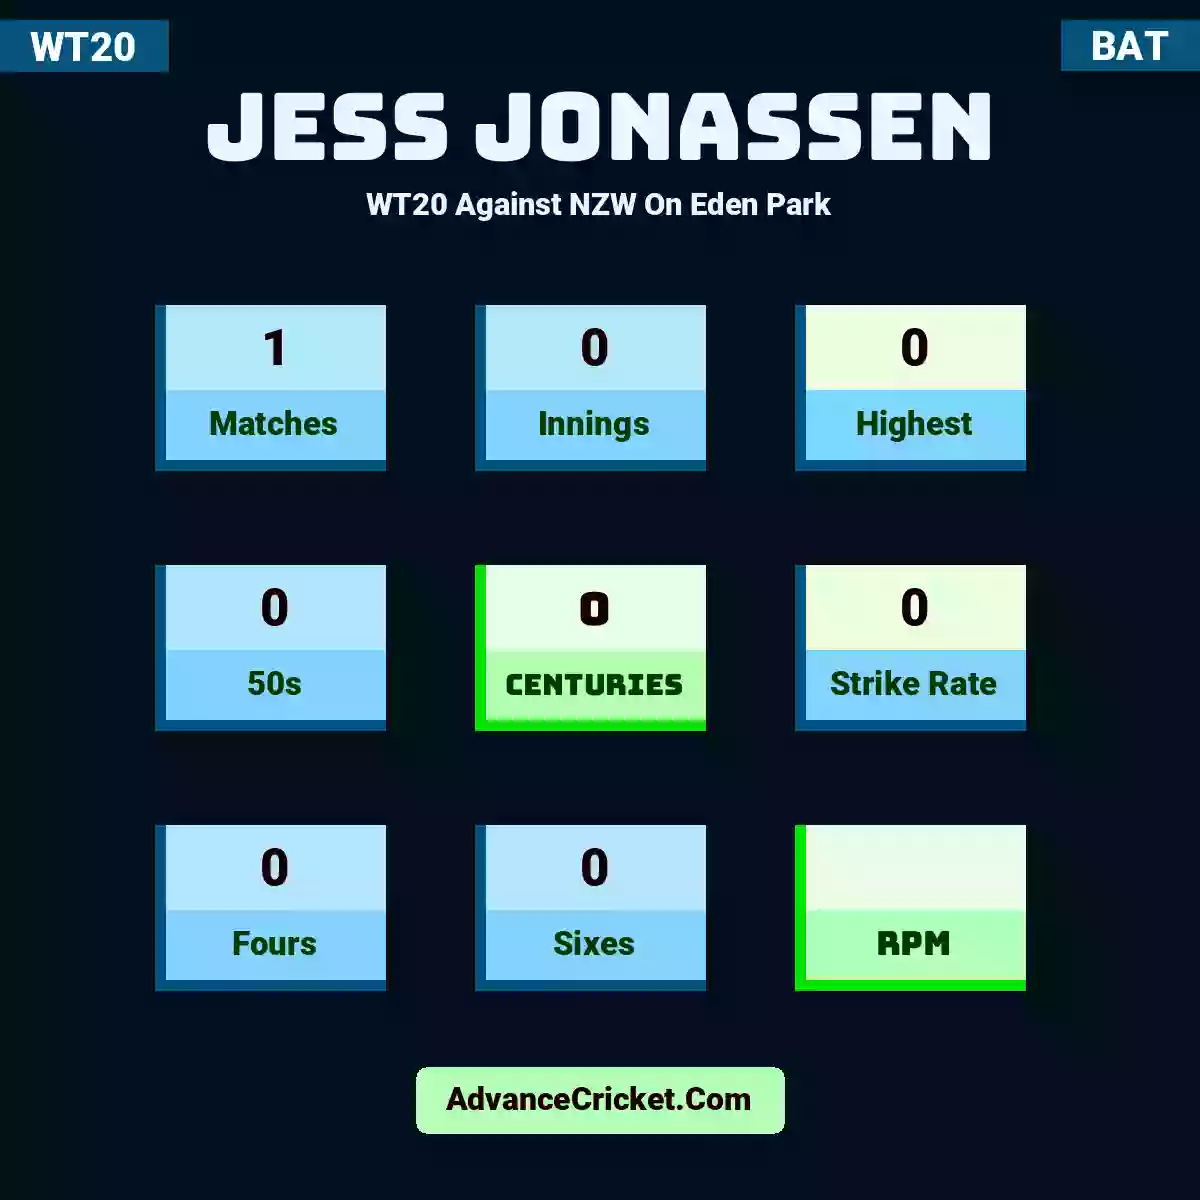 Jess Jonassen WT20  Against NZW On Eden Park, Jess Jonassen played 1 matches, scored 0 runs as highest, 0 half-centuries, and 0 centuries, with a strike rate of 0. J.Jonassen hit 0 fours and 0 sixes.